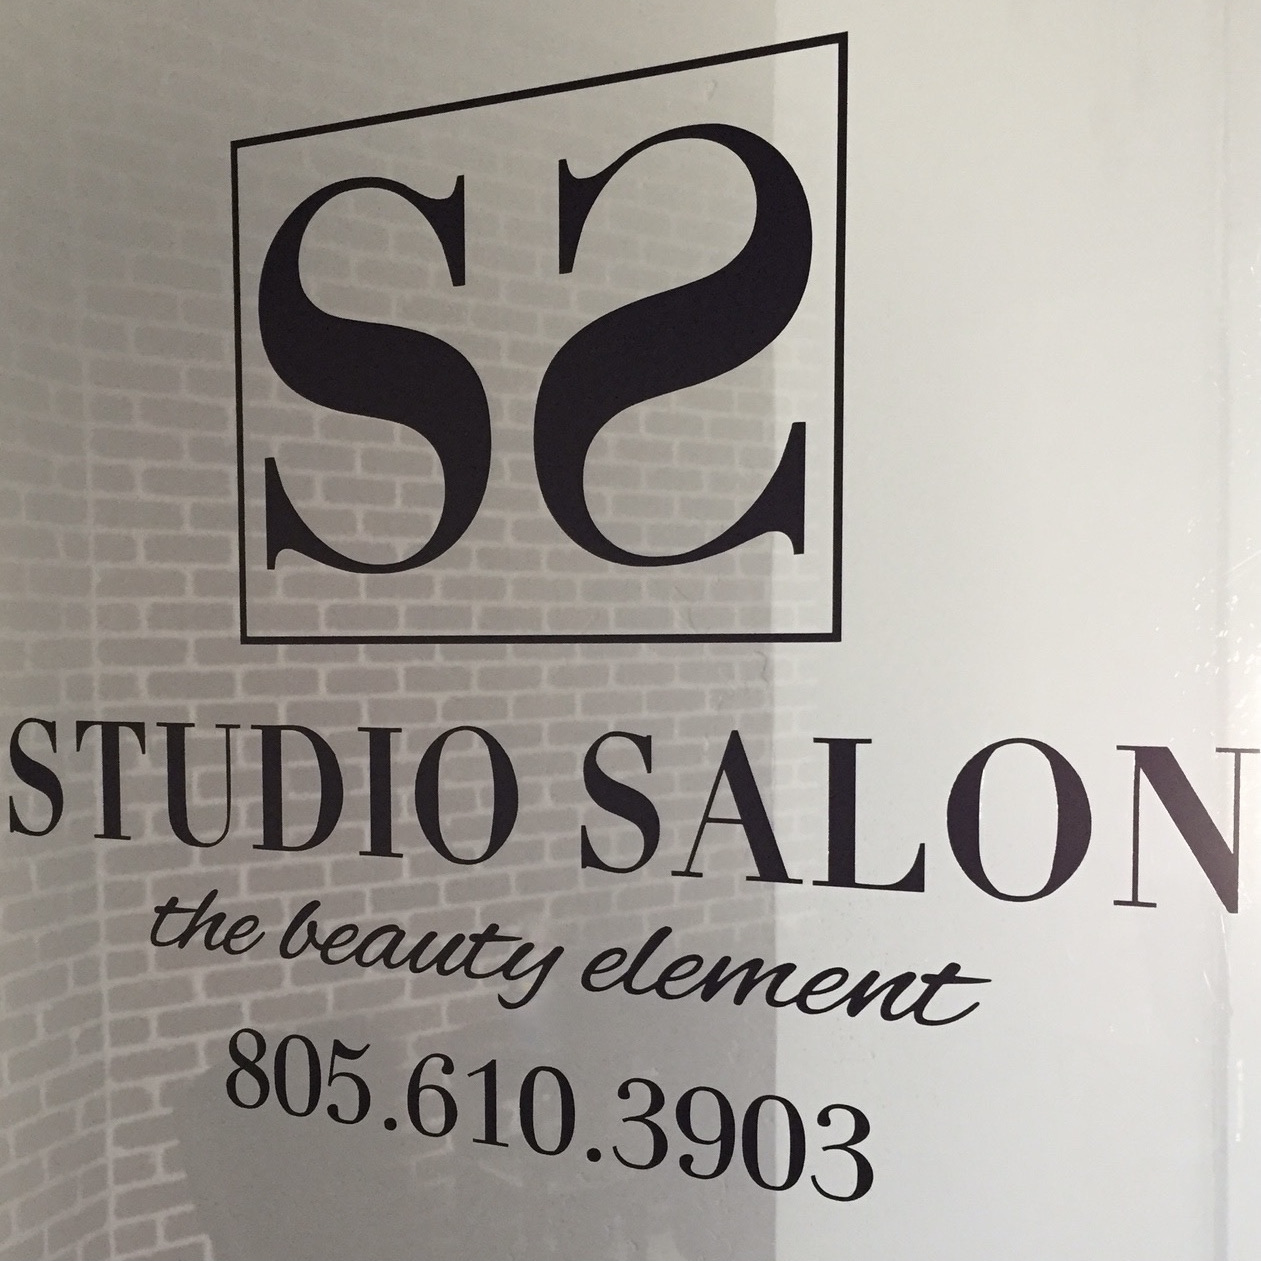 Studio Salon the beauty element